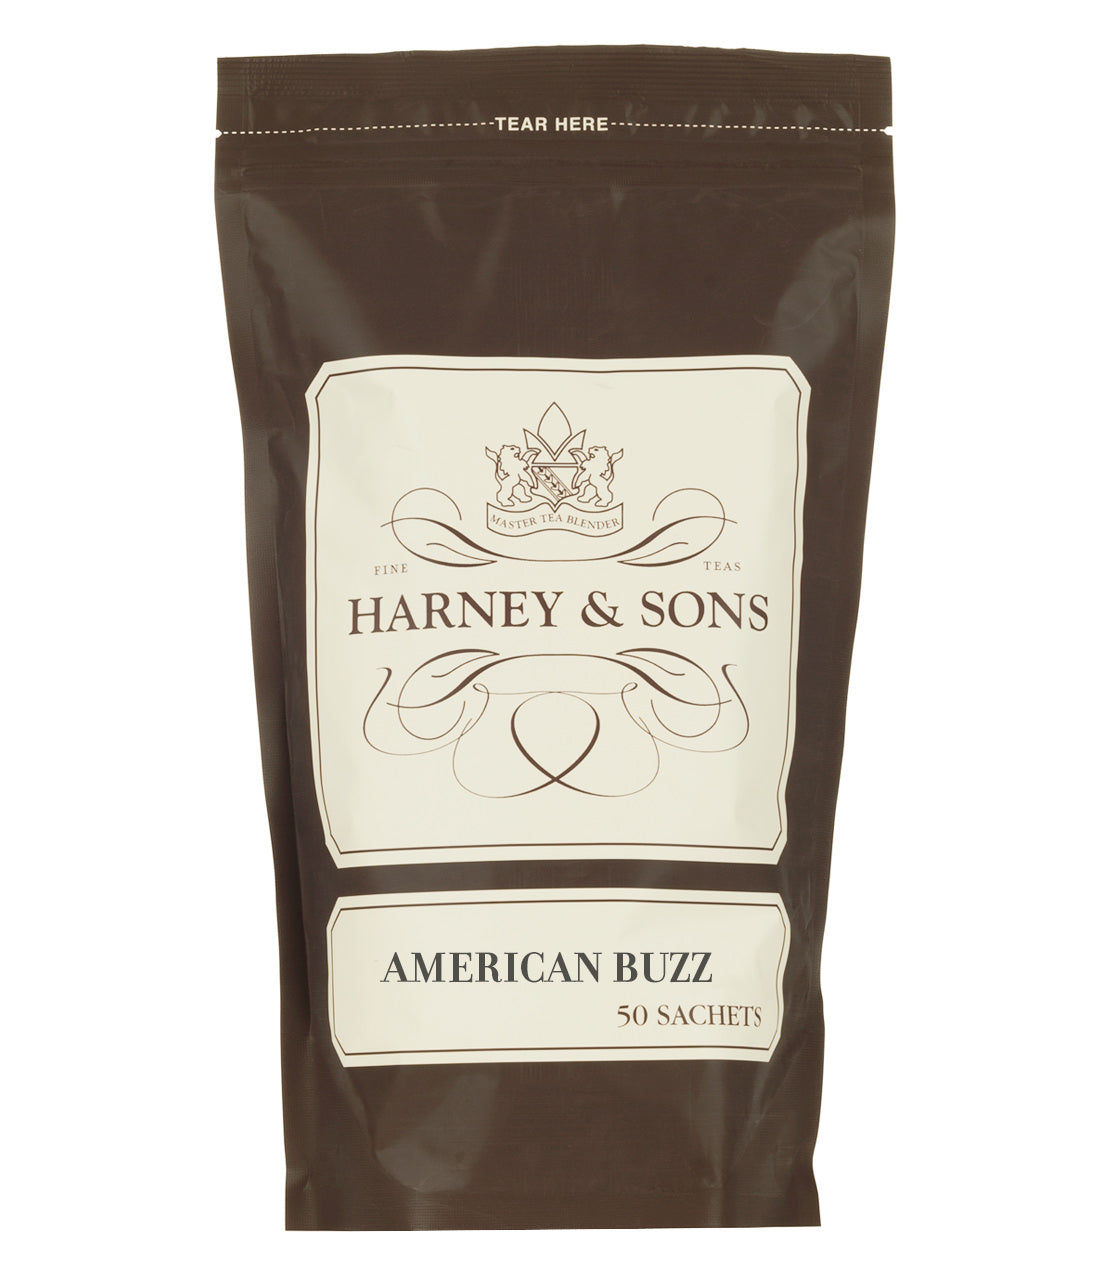 American Buzz - Sachets Bag of 50 Sachets - Harney & Sons Fine Teas